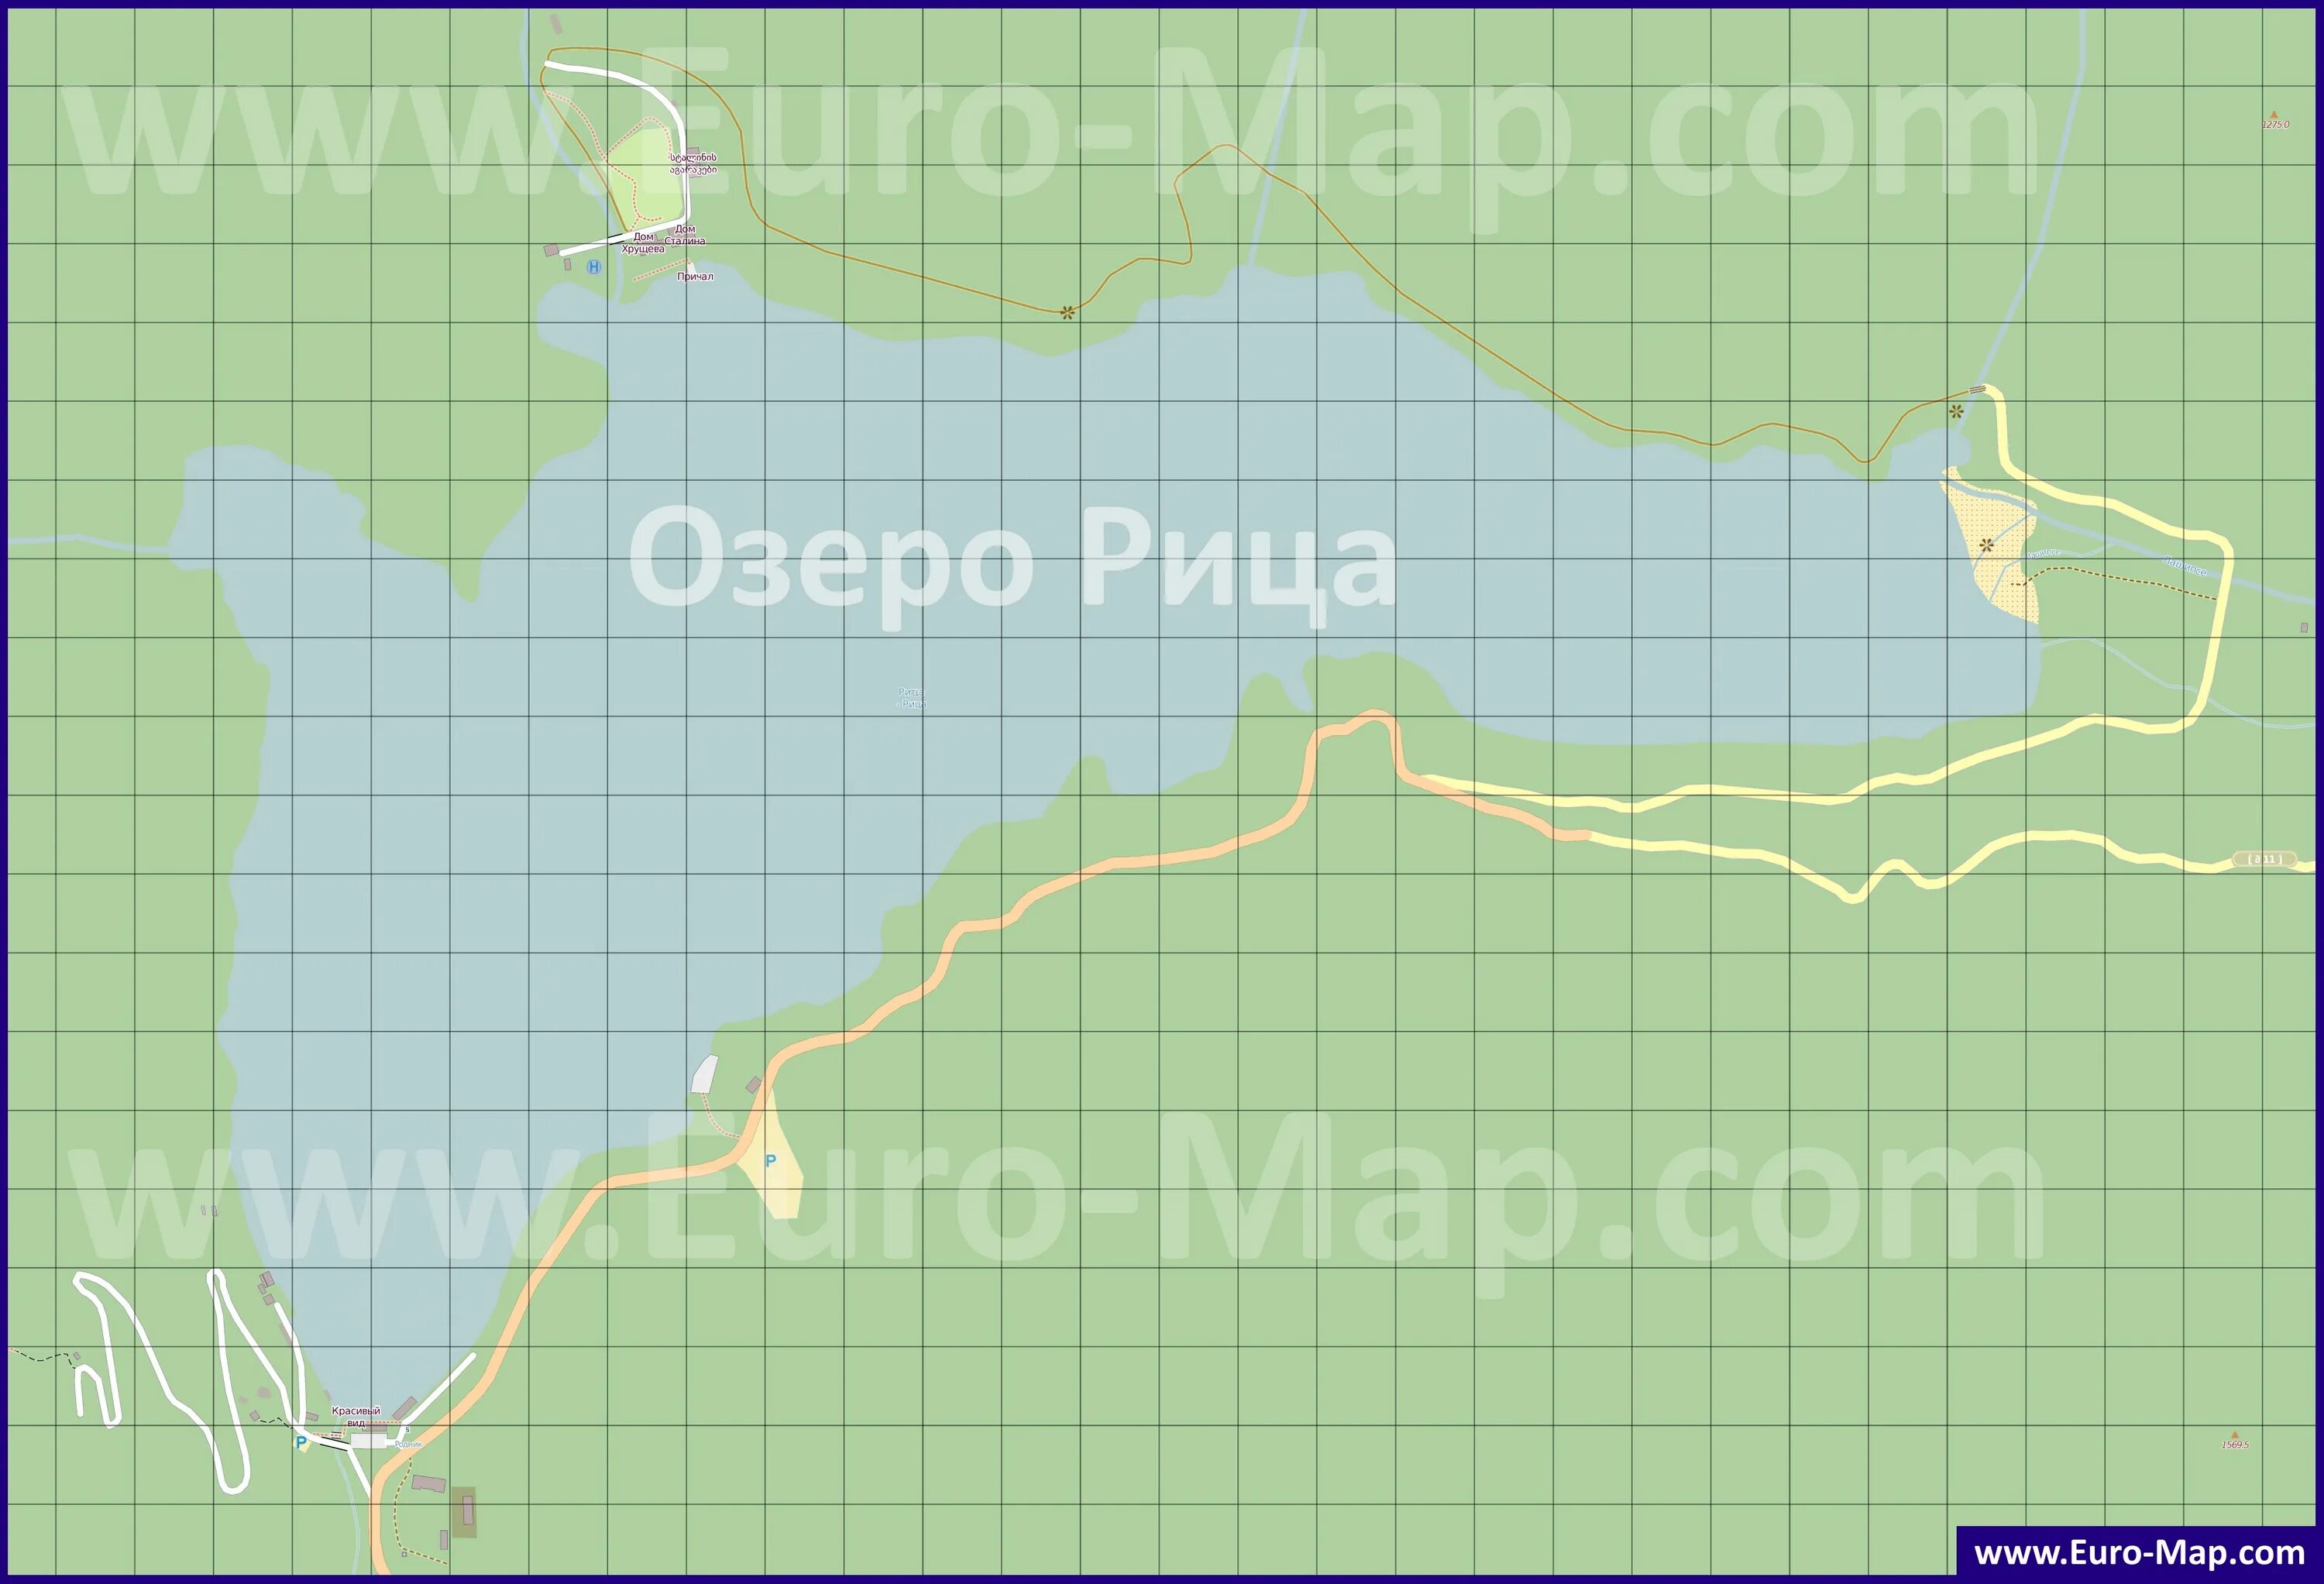 Озеро рица где находится на карте. Озеро Рица на карте. Рица Абхазия на карте. Озеро Рица карта глубин. Оз Рица на карте.